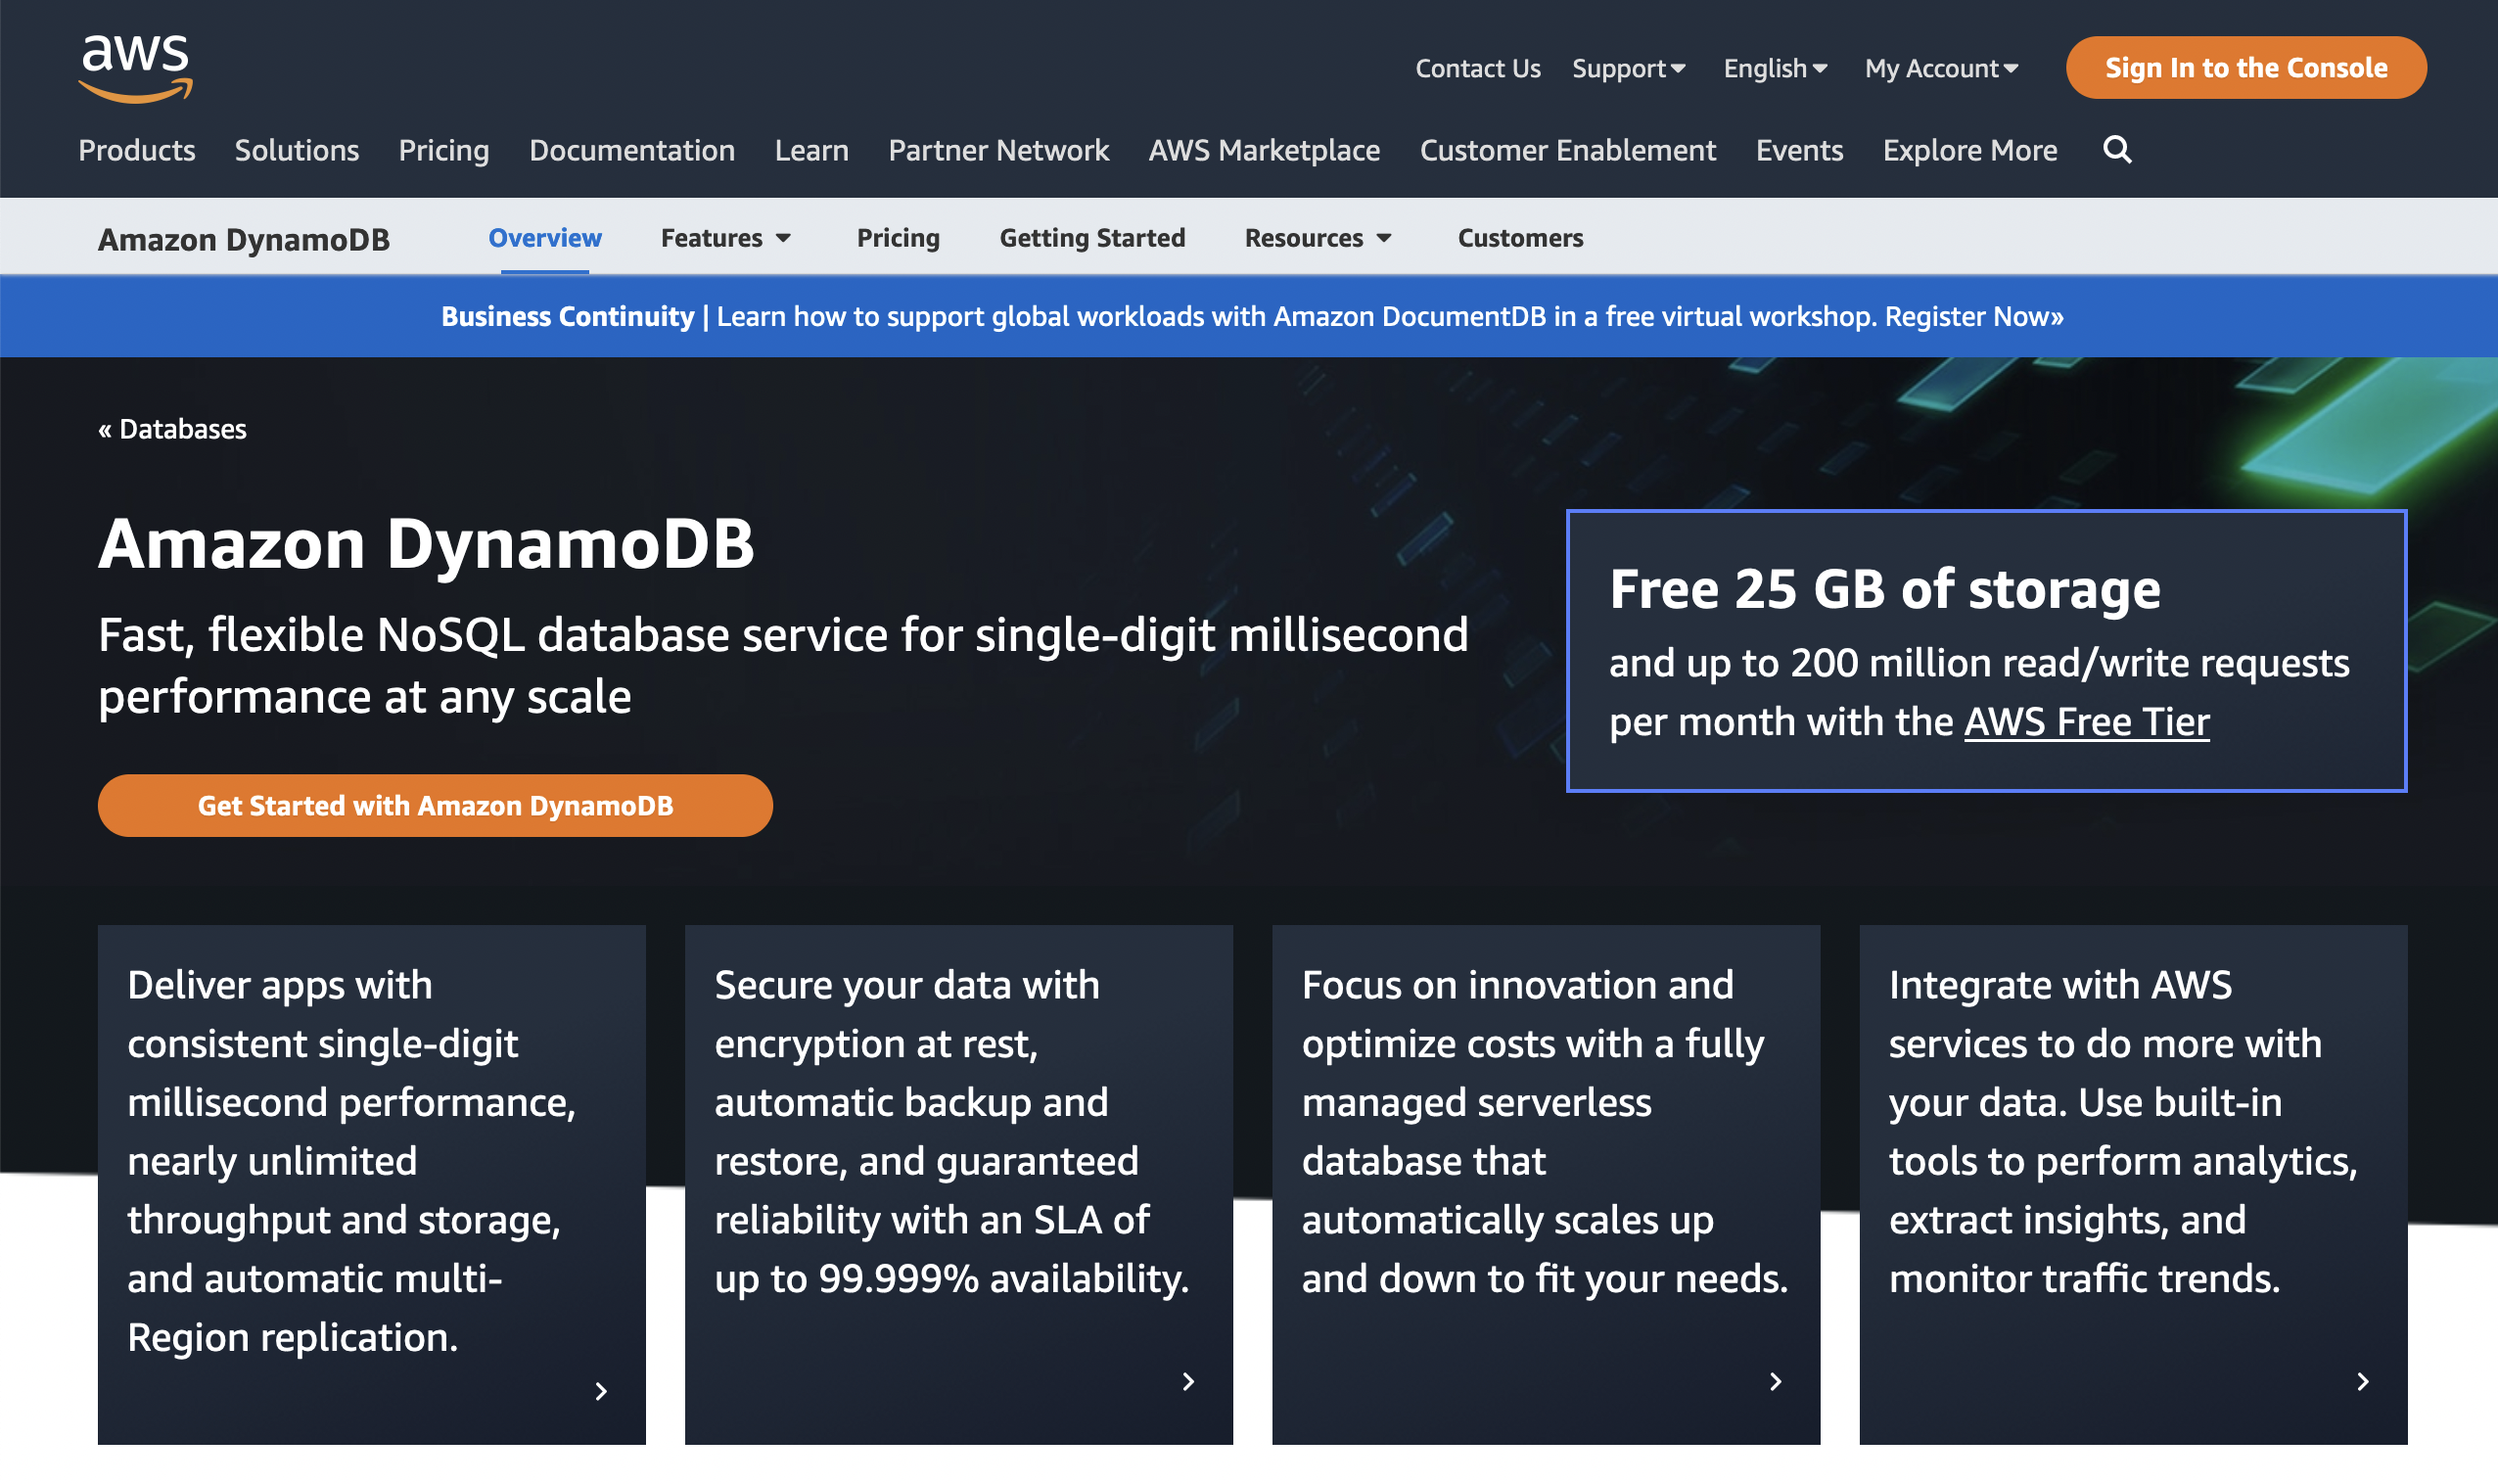 Landing page for AWS DynamoDB